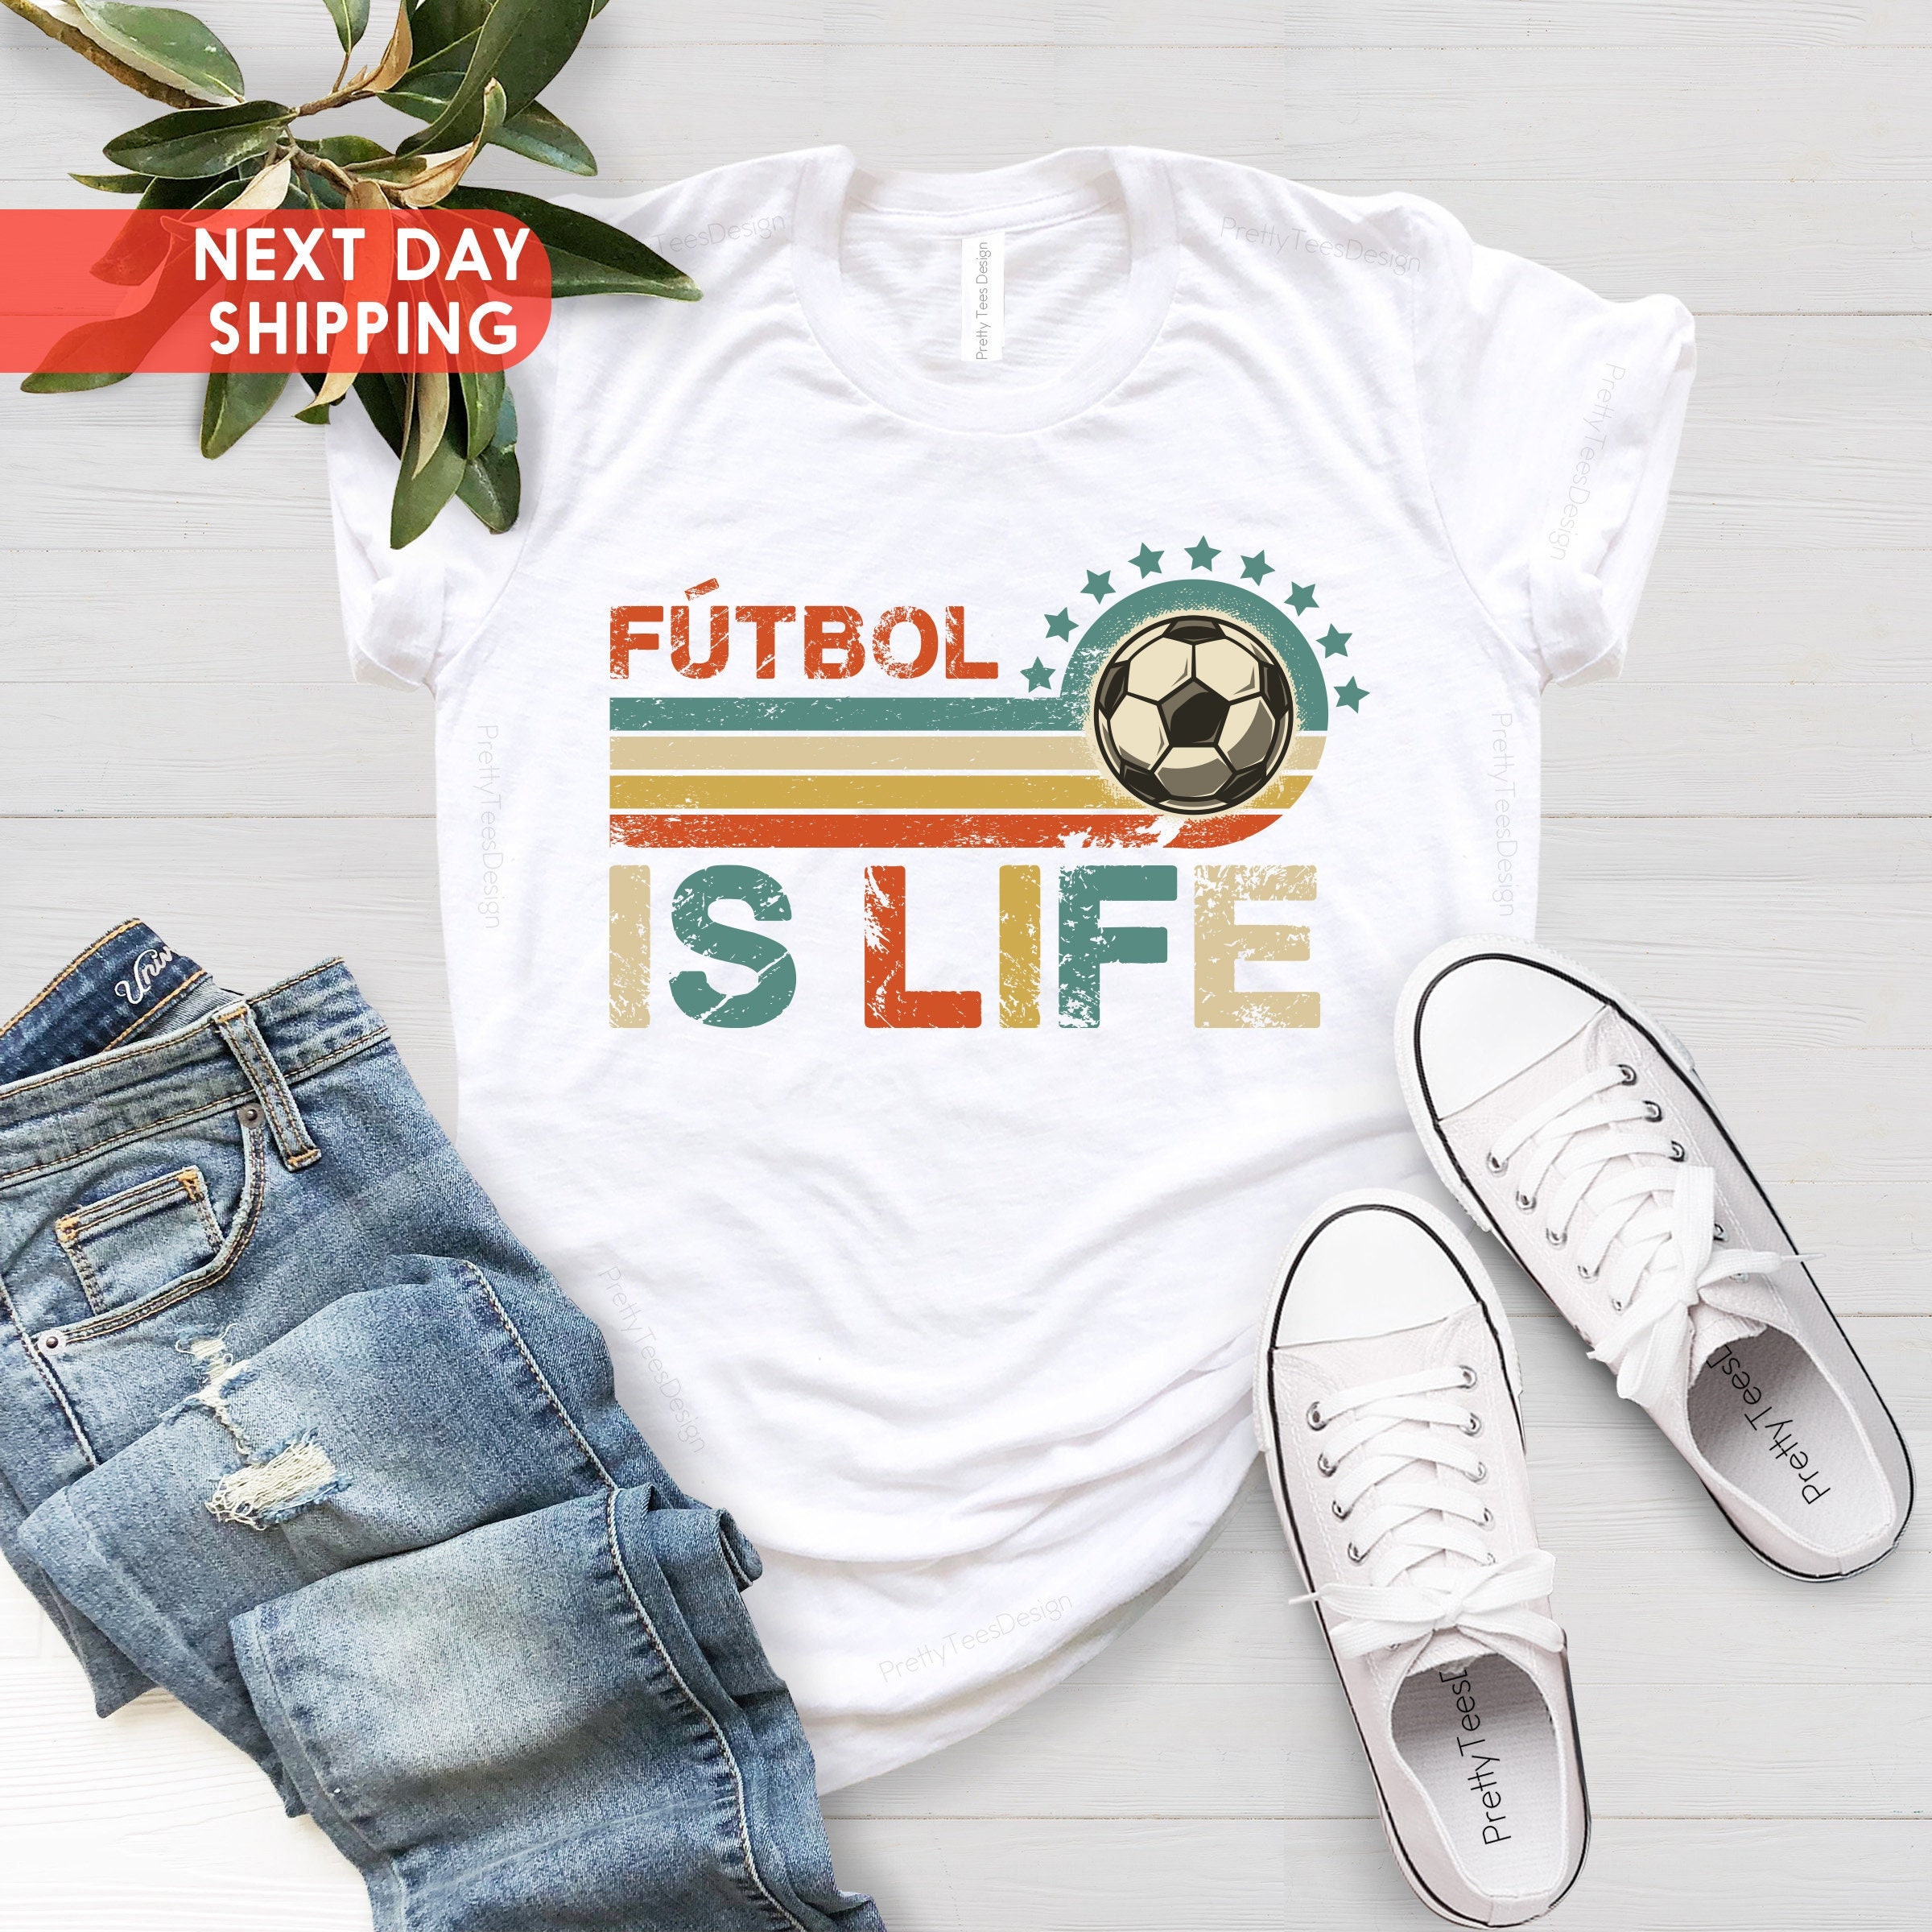 Football funny sports retro vintage t-shirt design